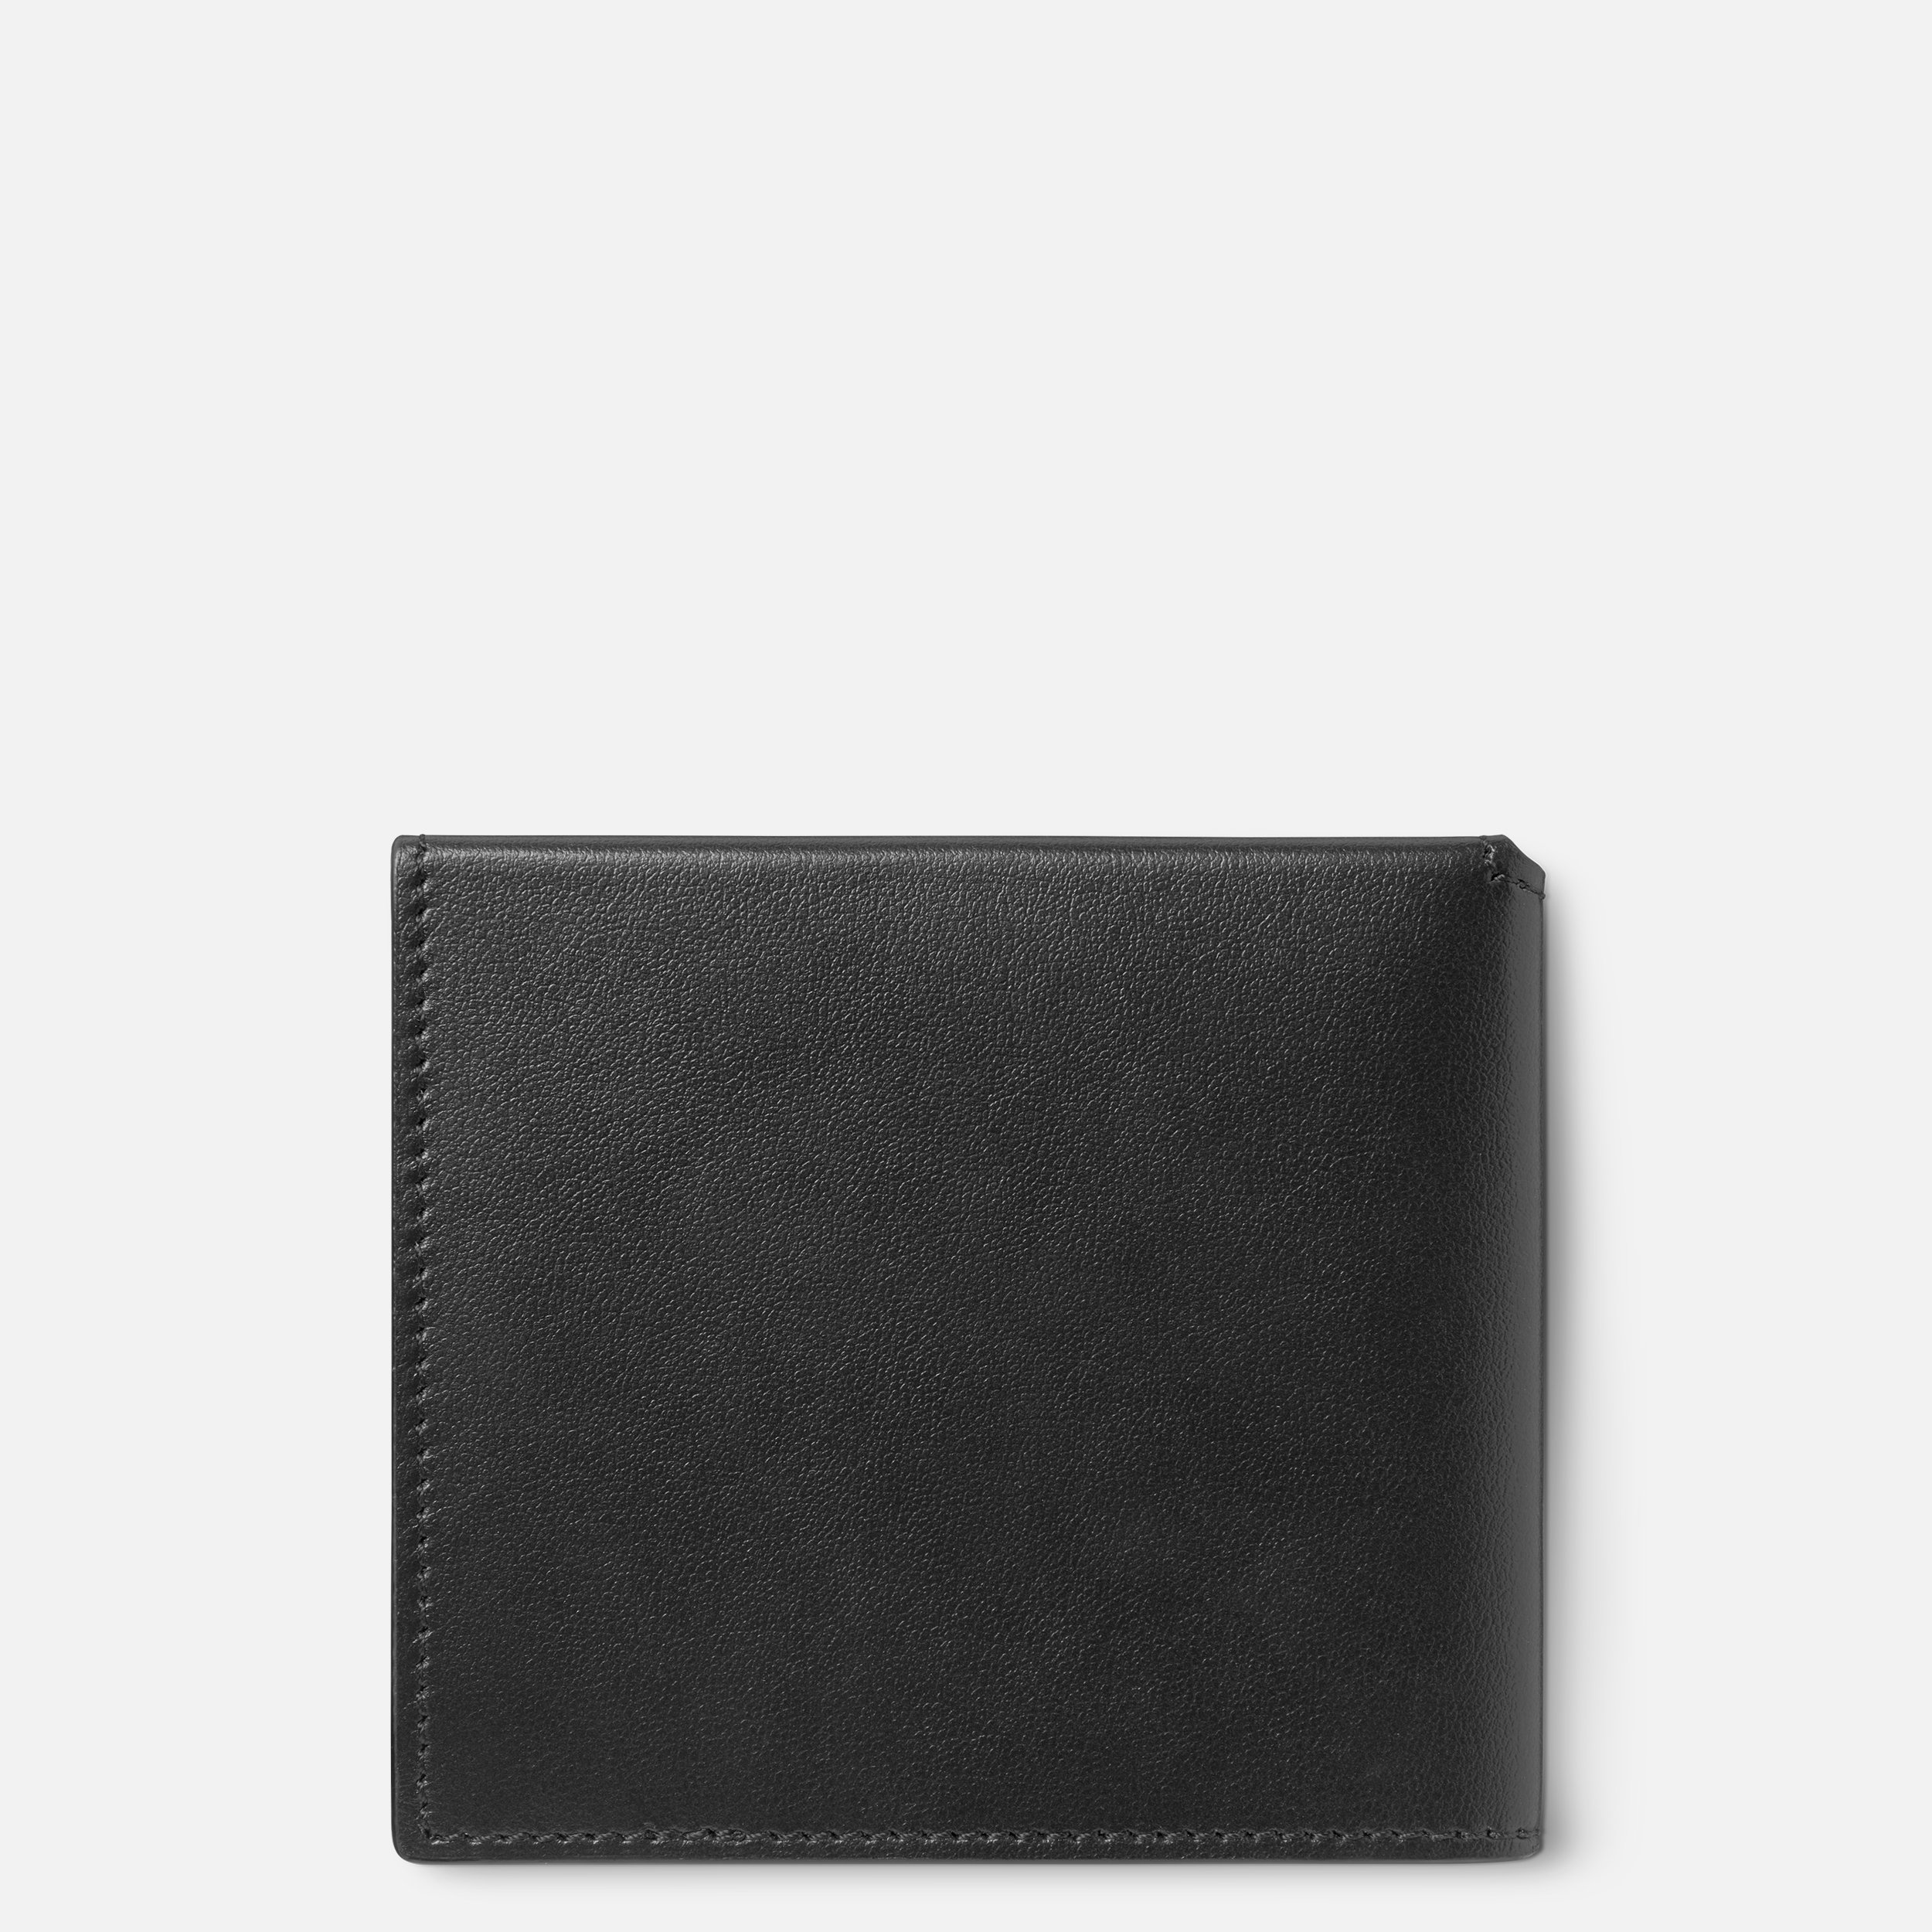 Soft trio thin wallet 4cc - 3